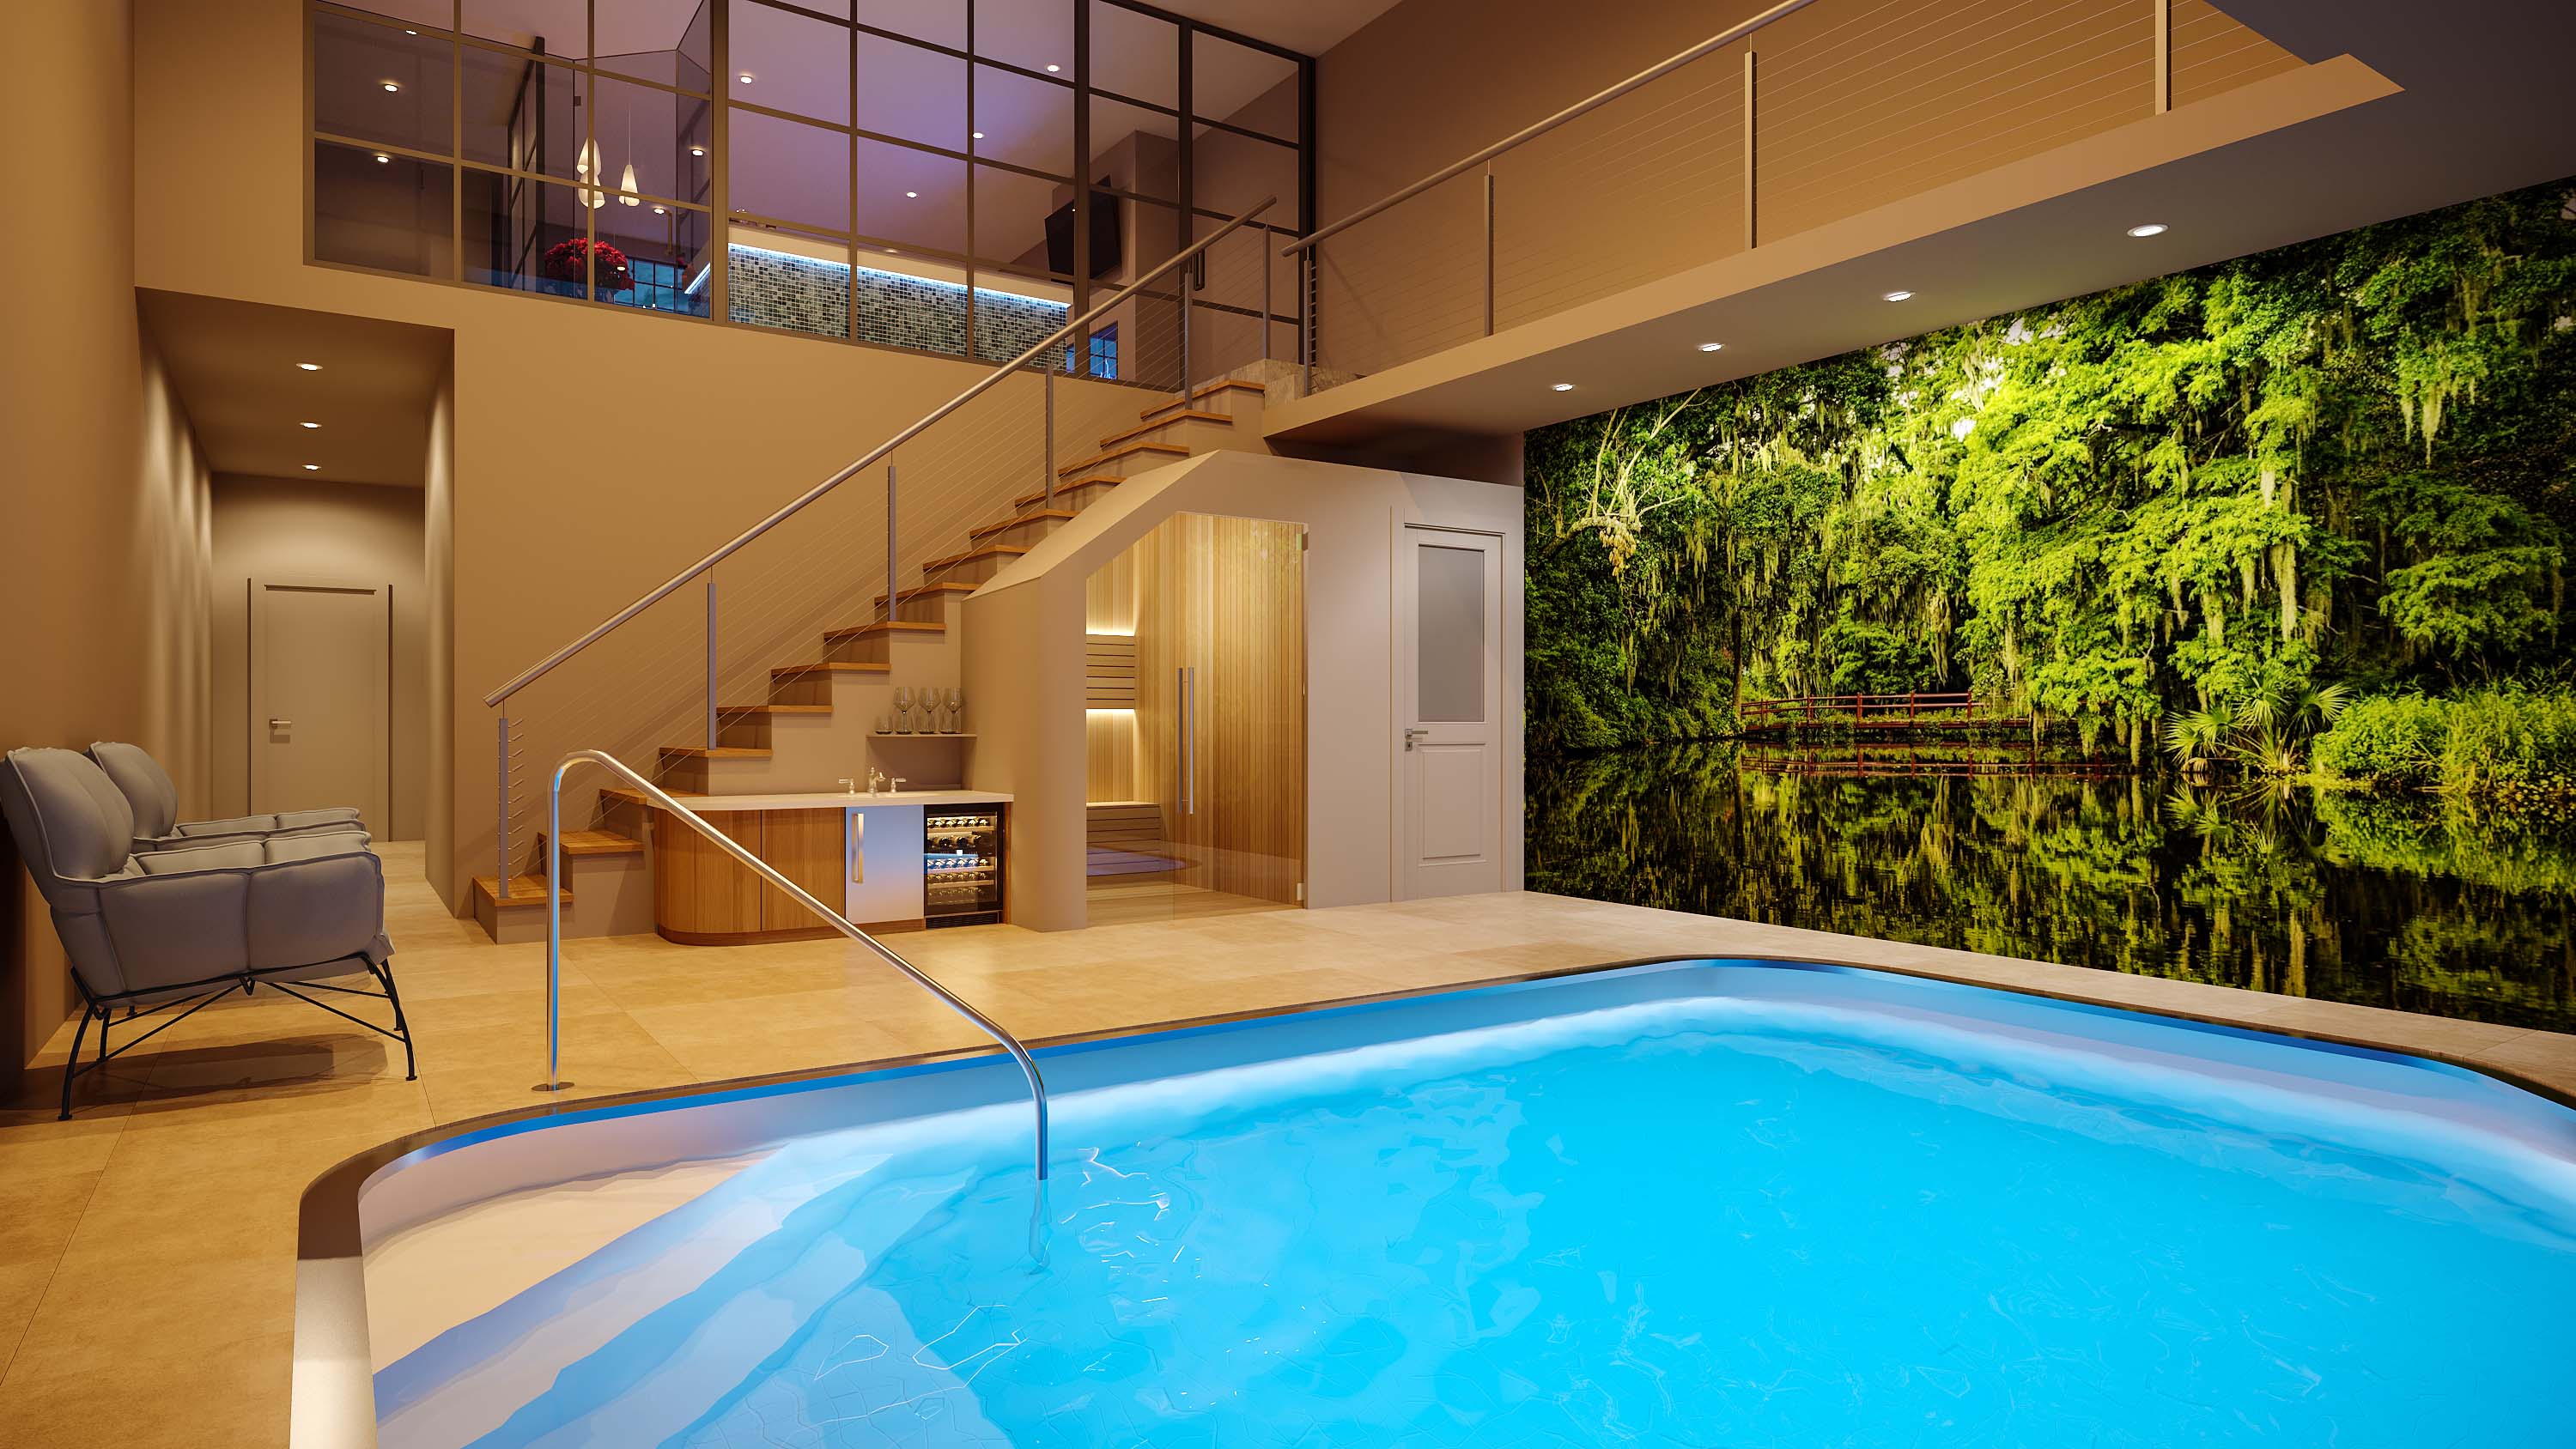 Cabana suites interiors Applet3D